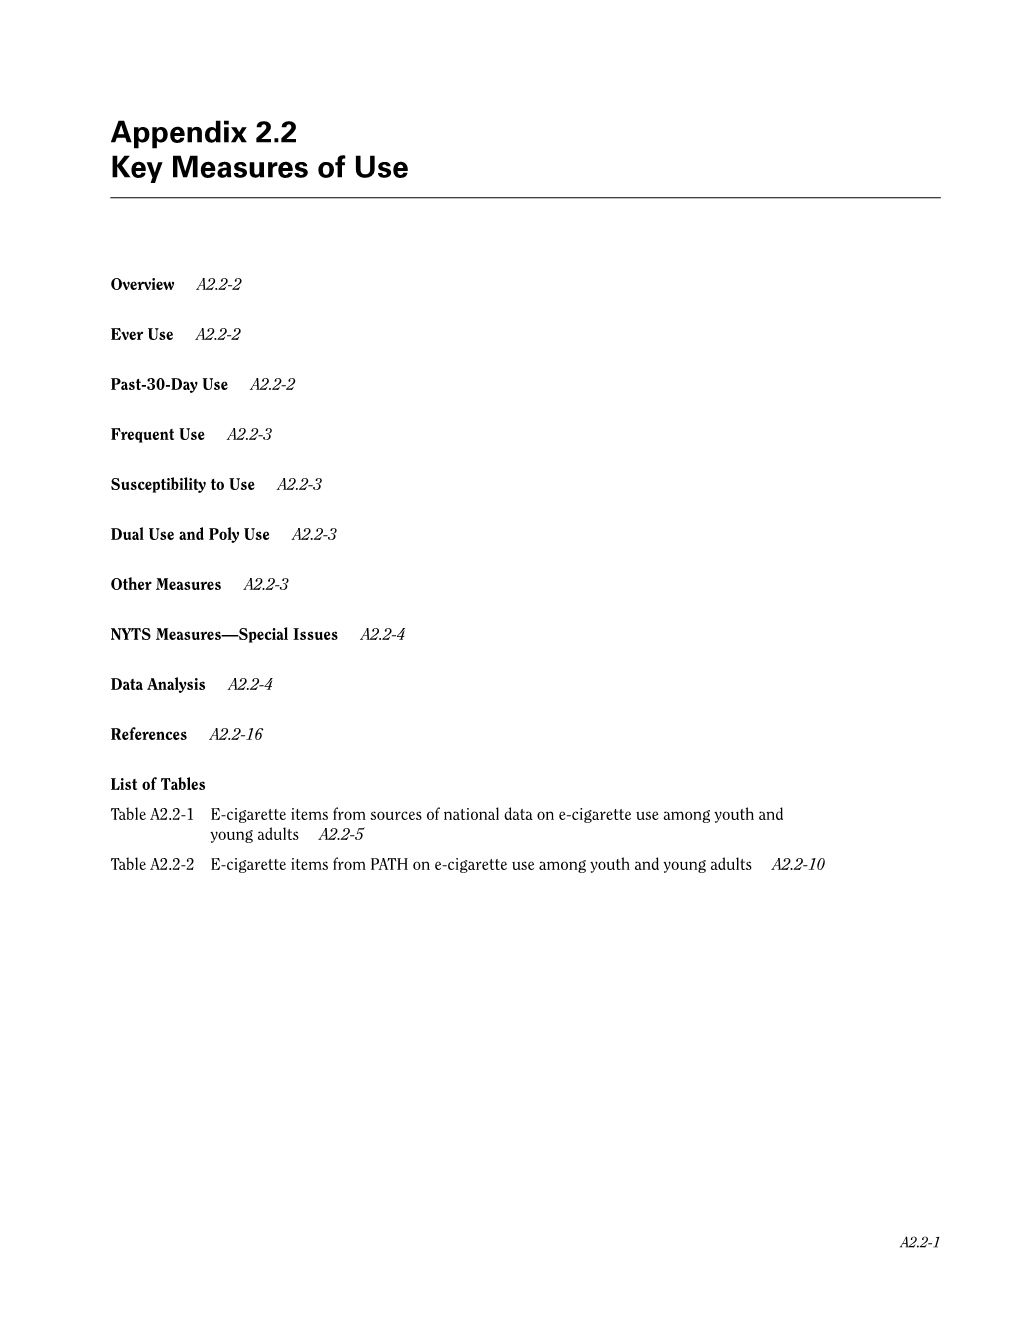 Appendix 2.2. Key Measures of Use (In E-Cigarette Use Among